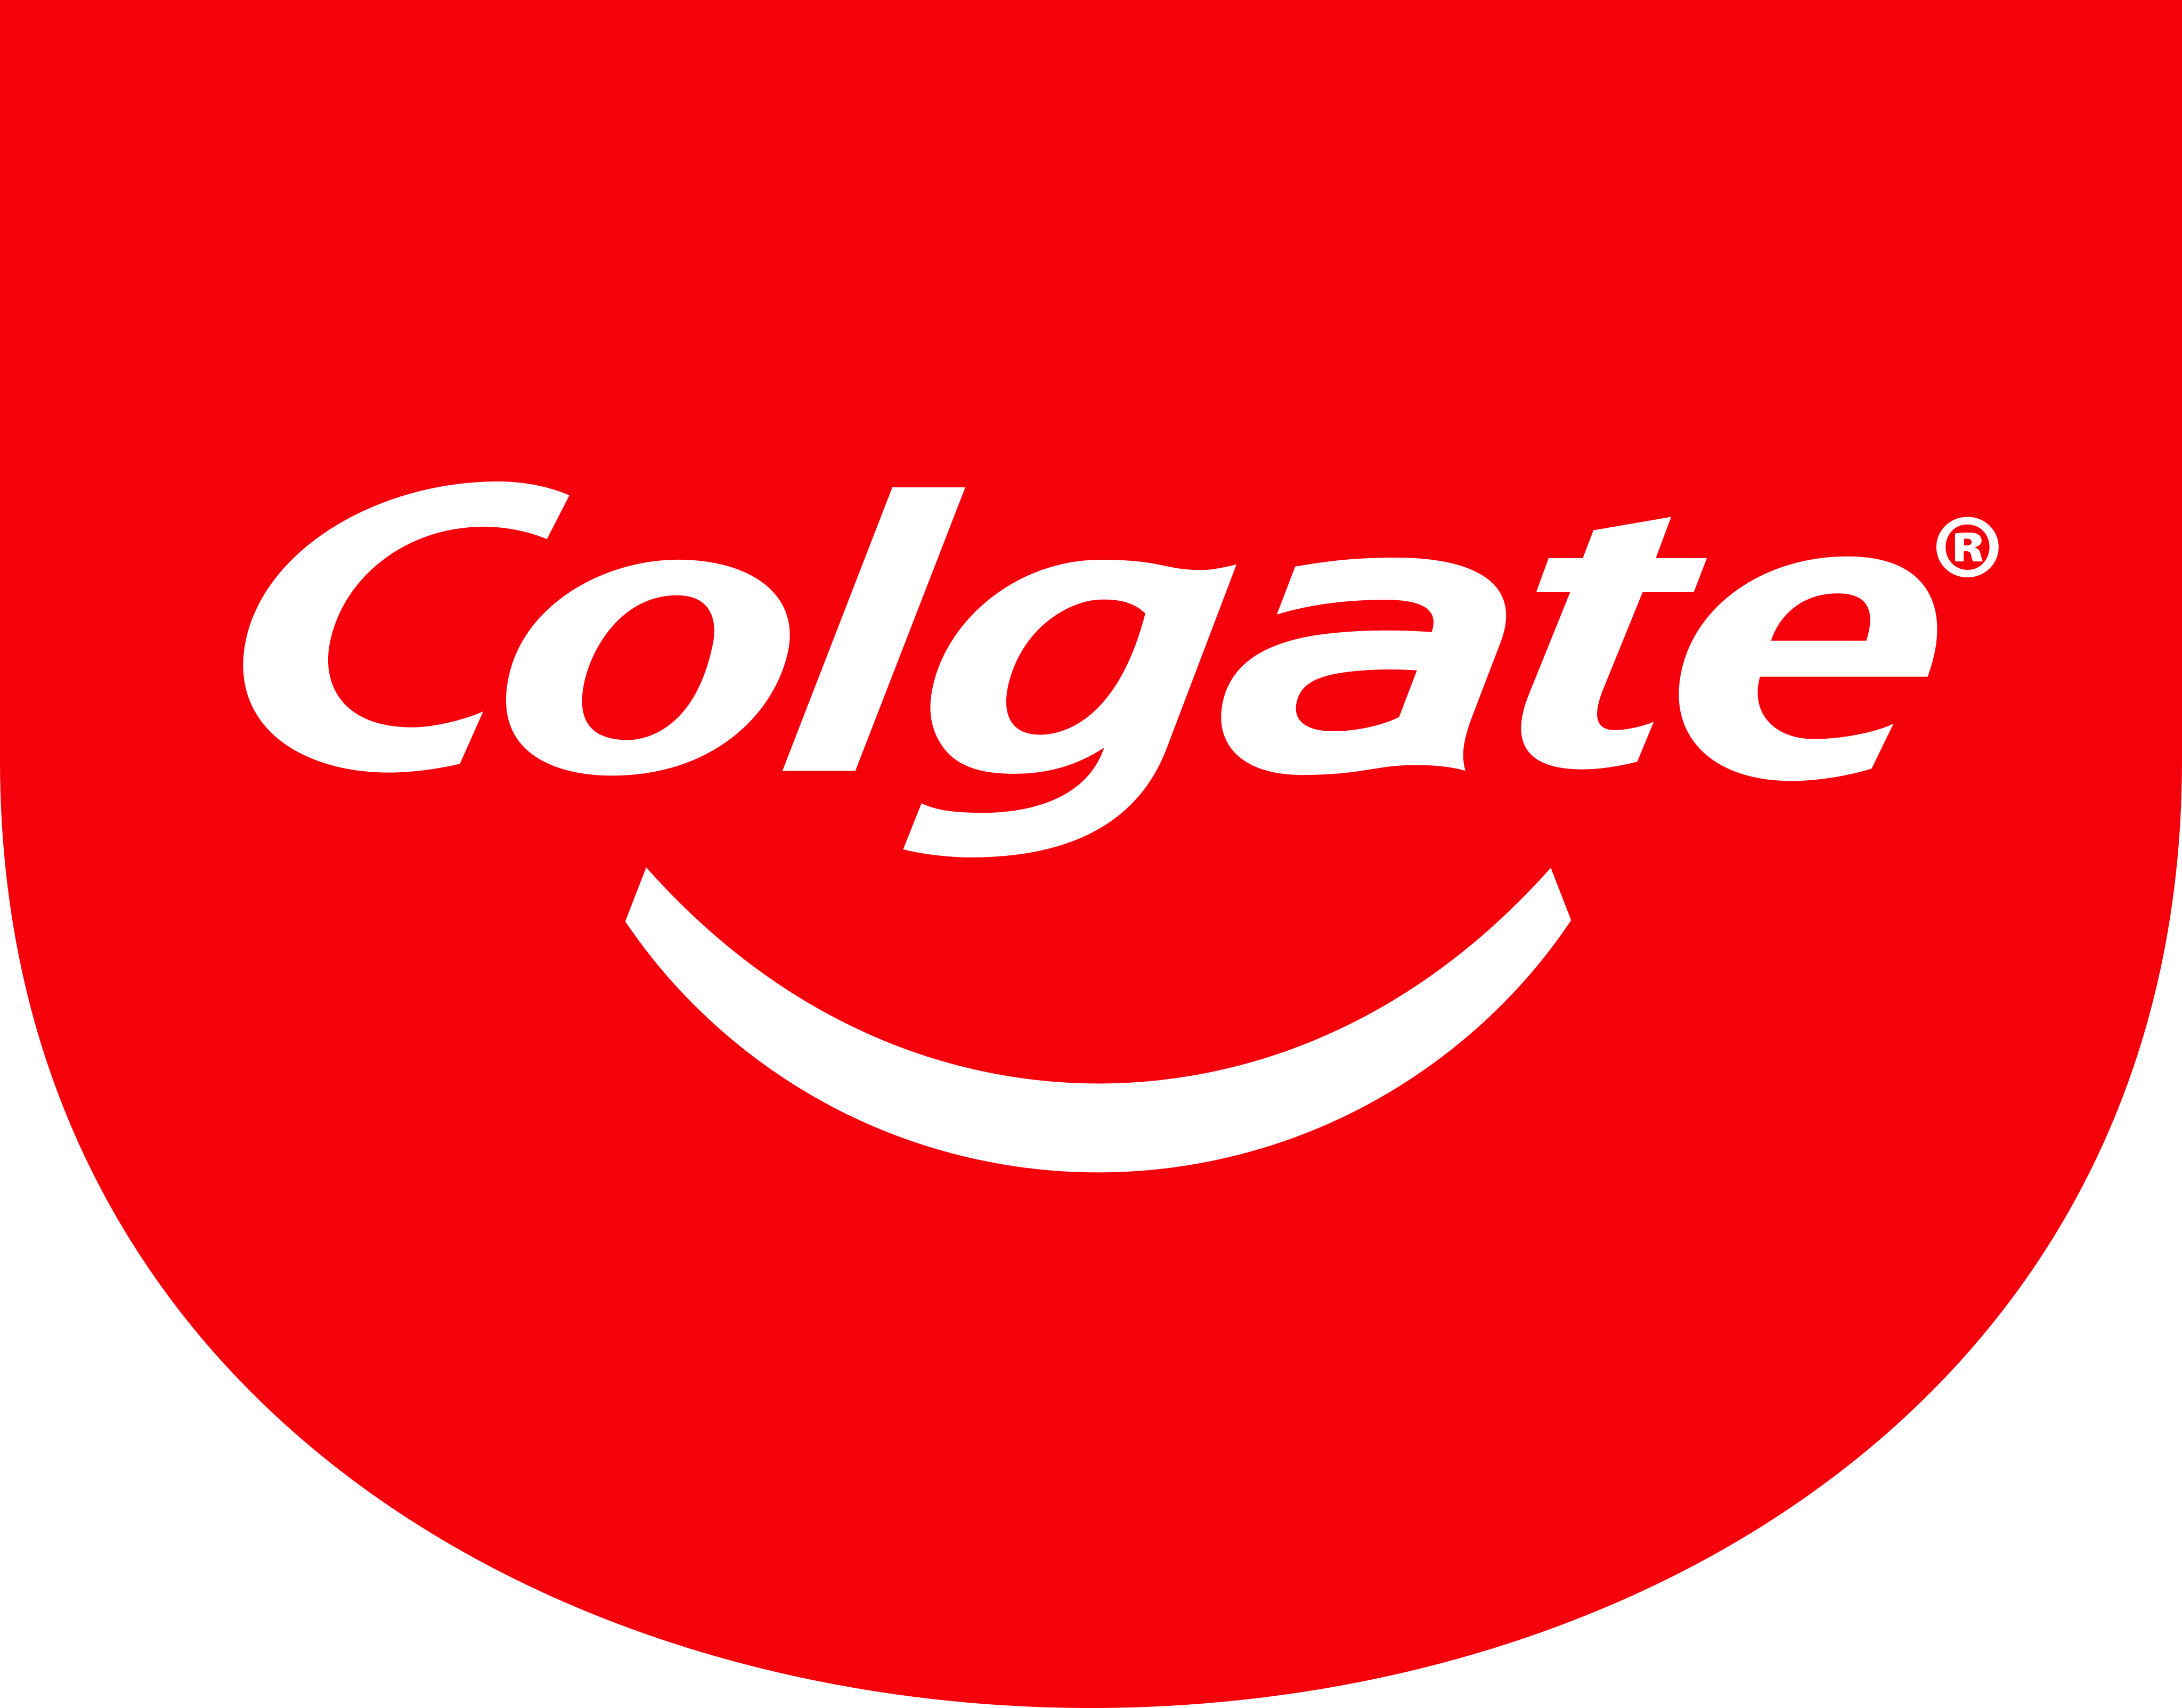 colgate logo 5 - Colgate Logo